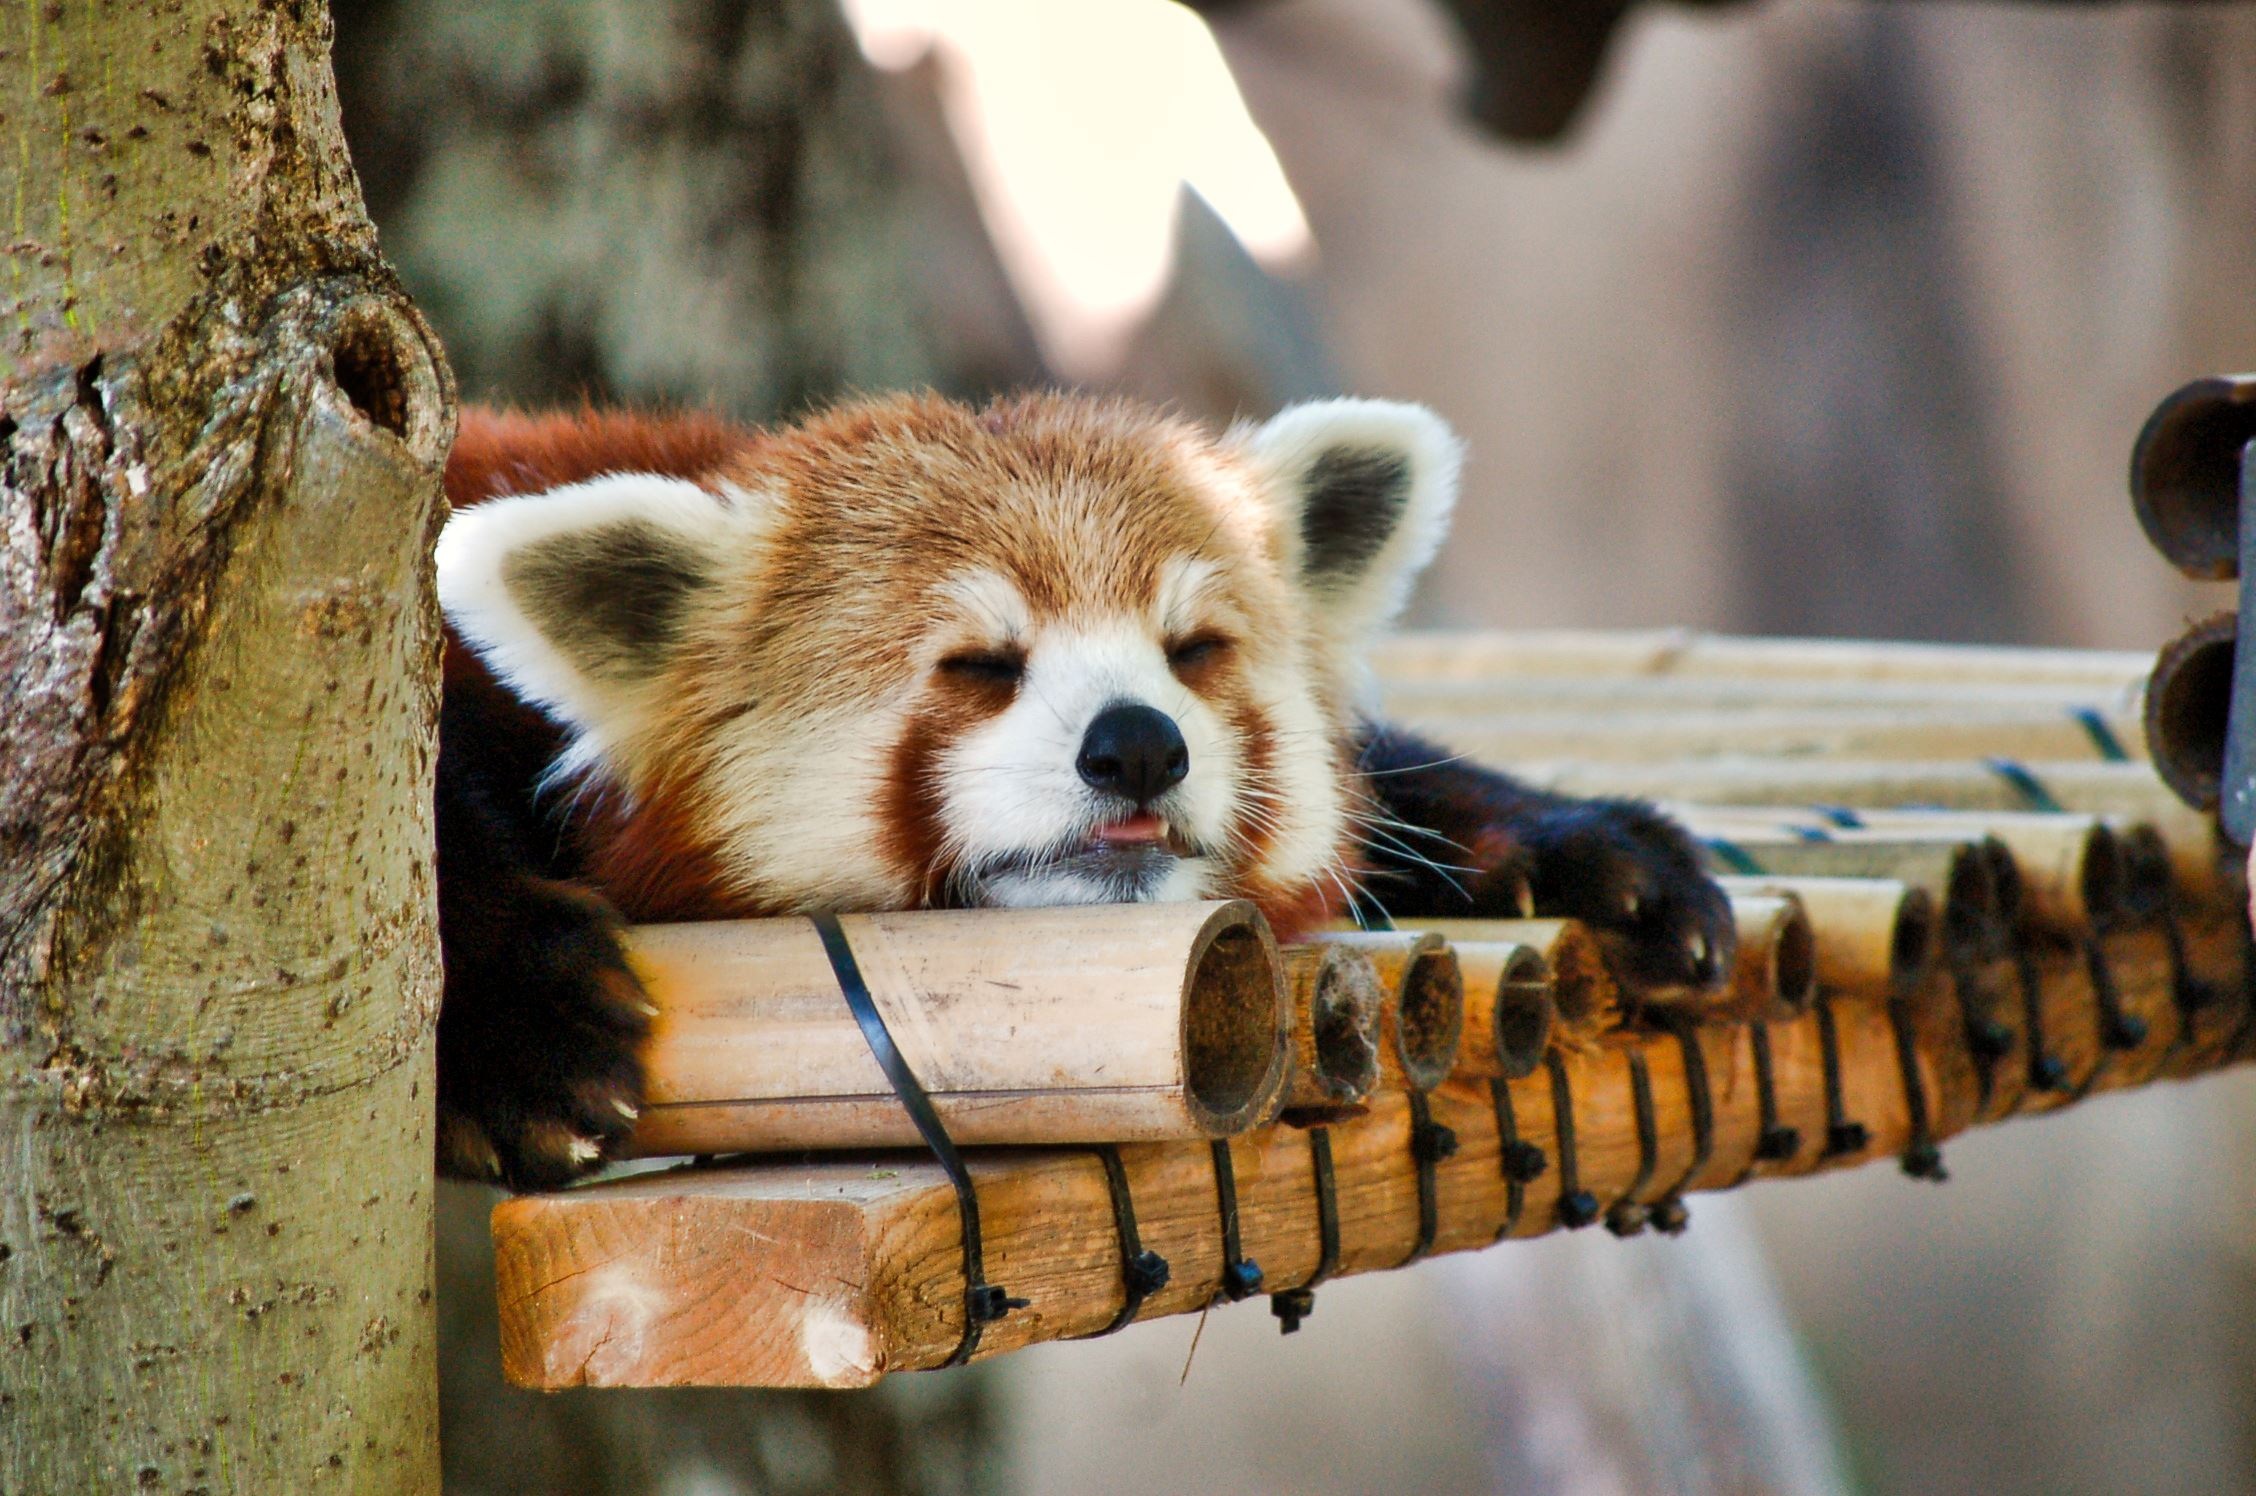 Red panda sound asleep